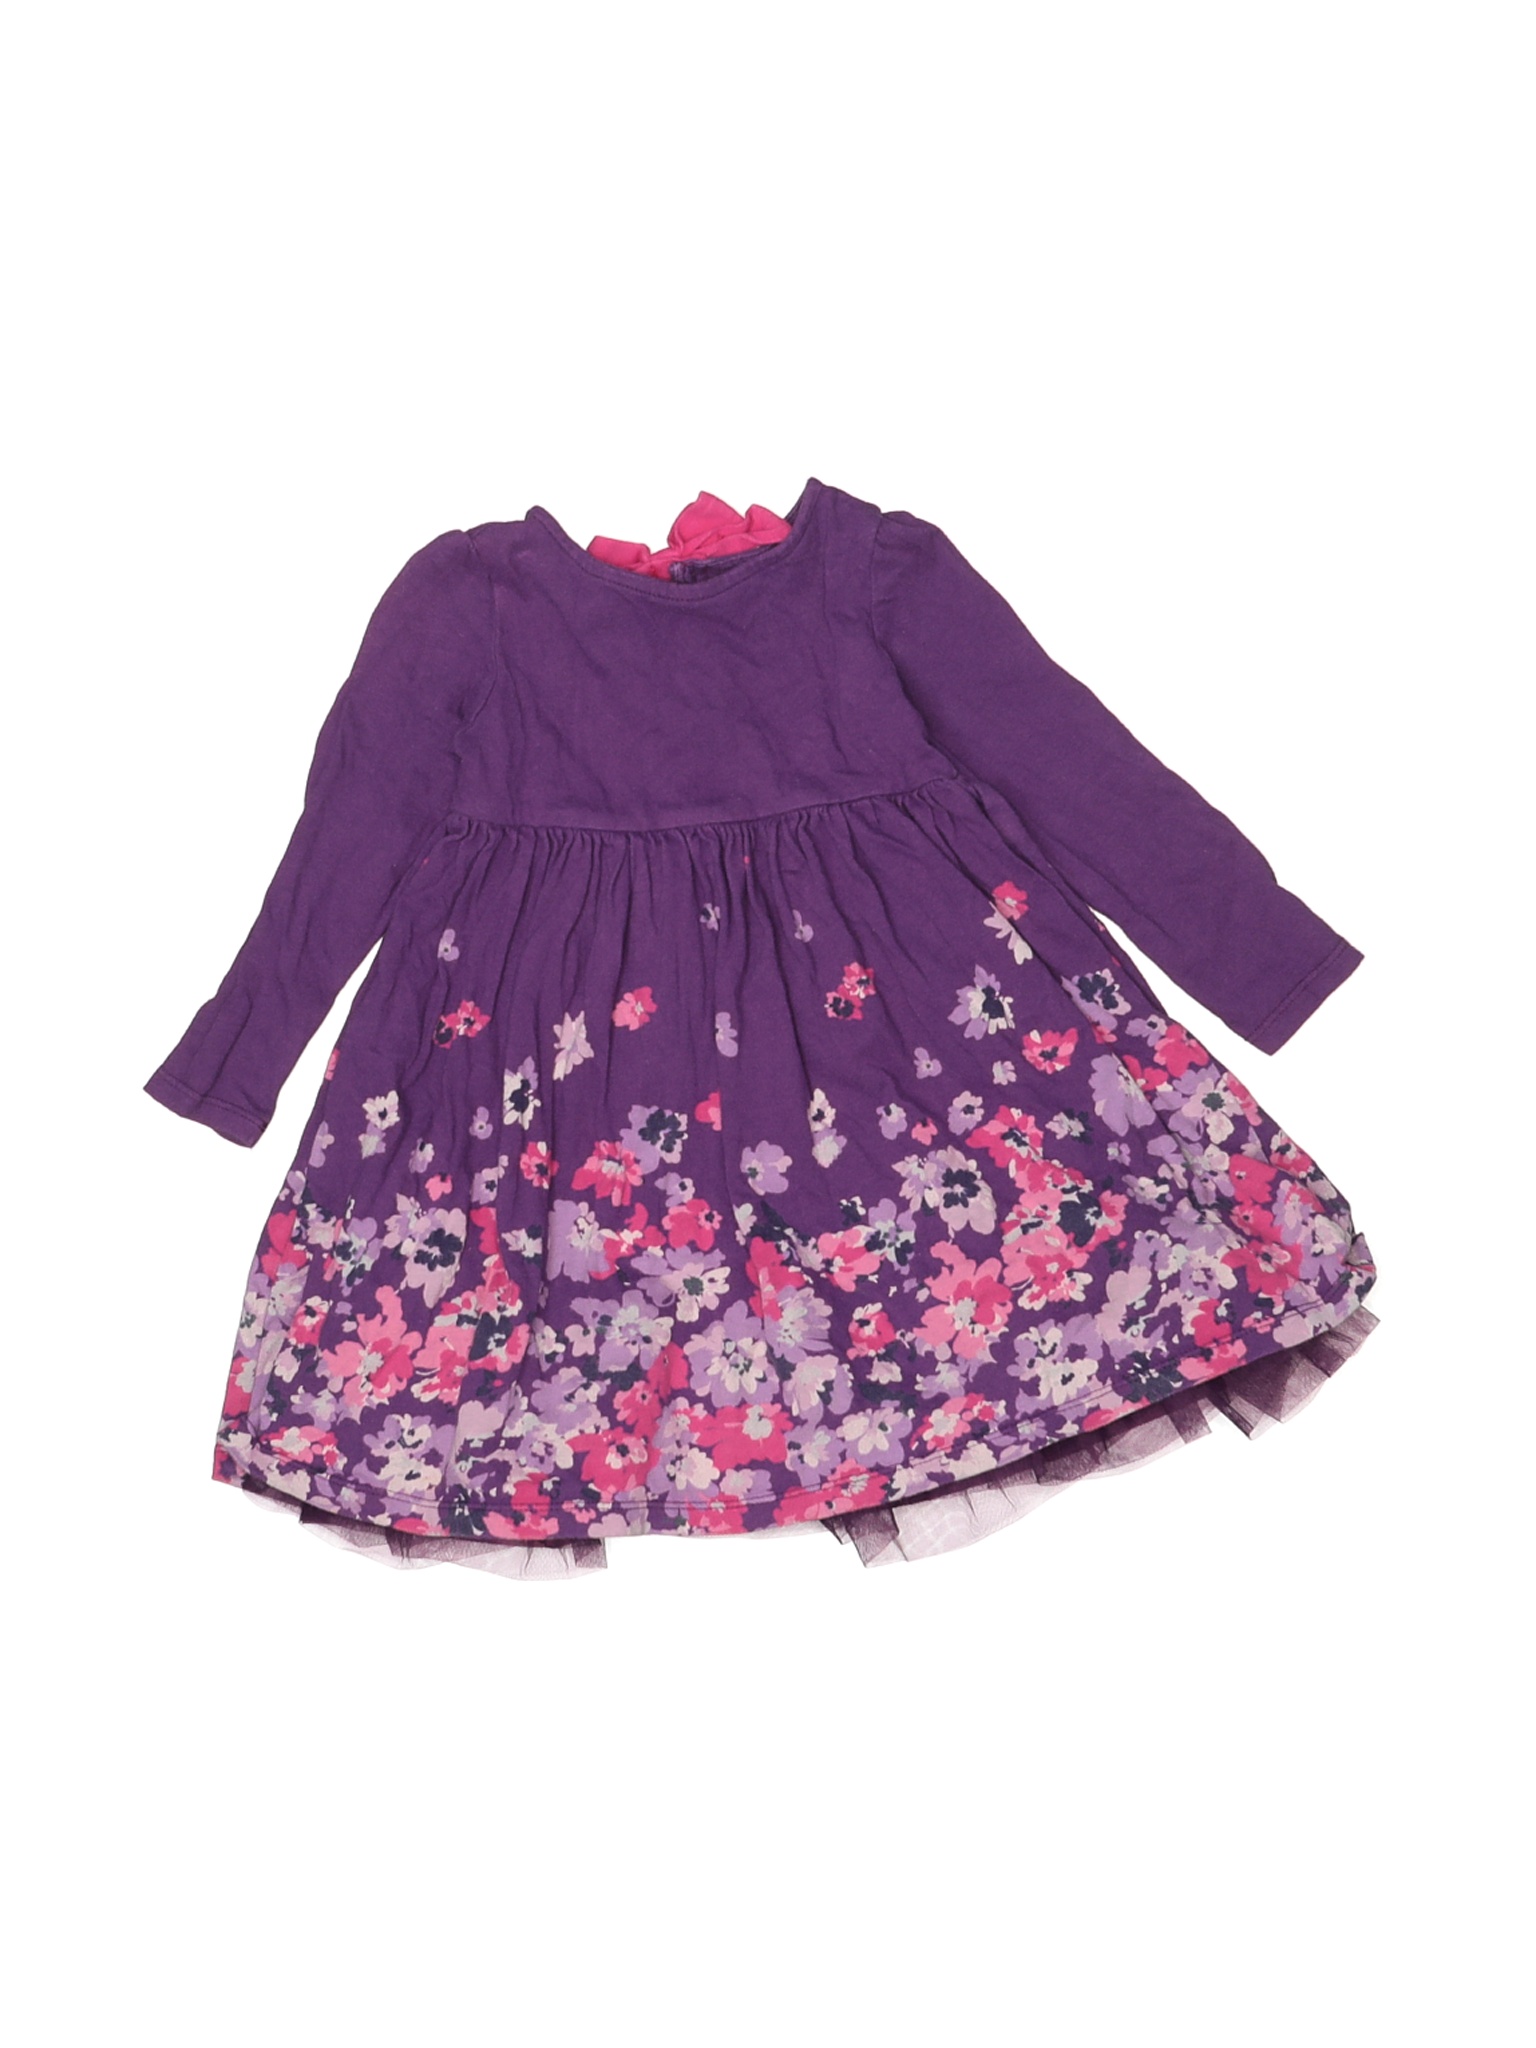 Gymboree Girls Purple Dress 3T | eBay